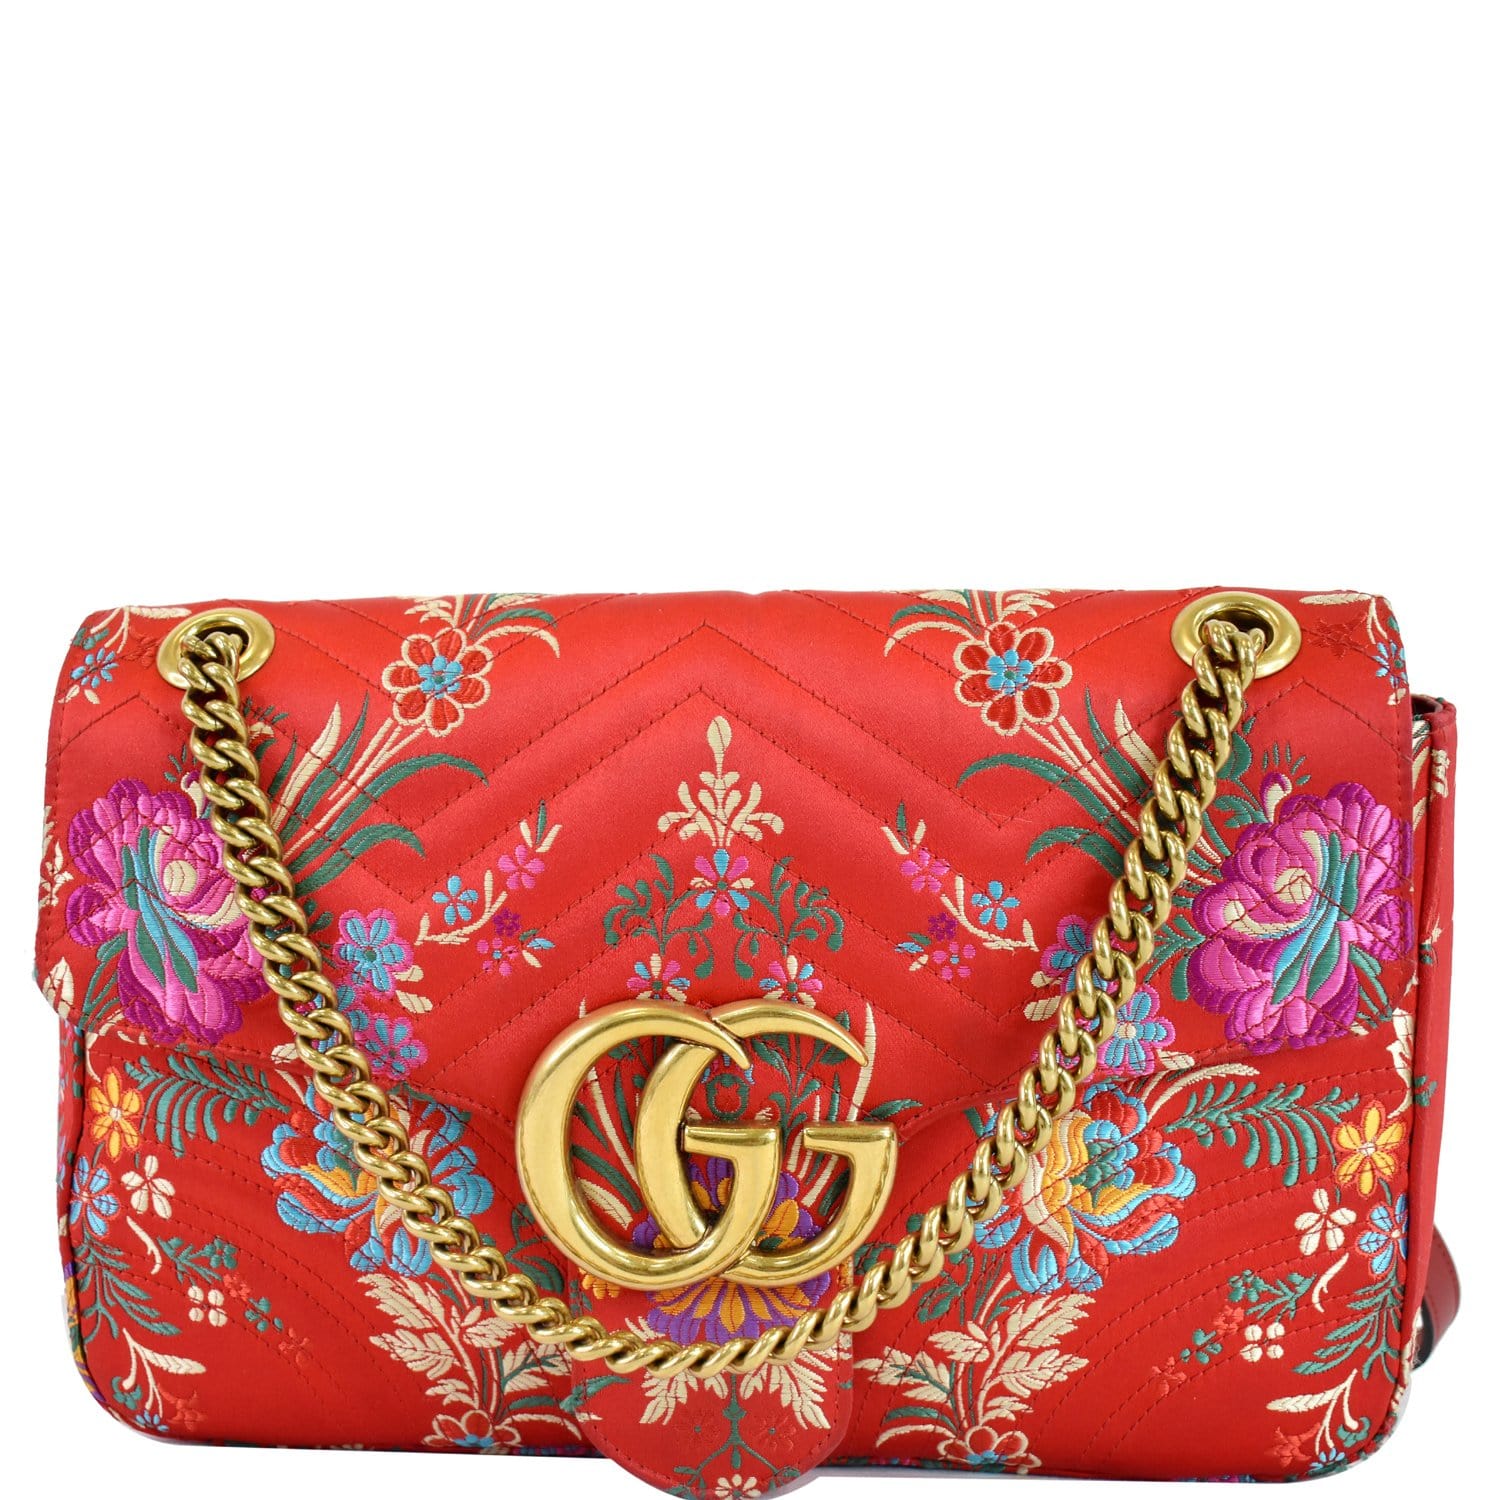 Gucci GG Marmont bag 26 cm - Gaja Refashion